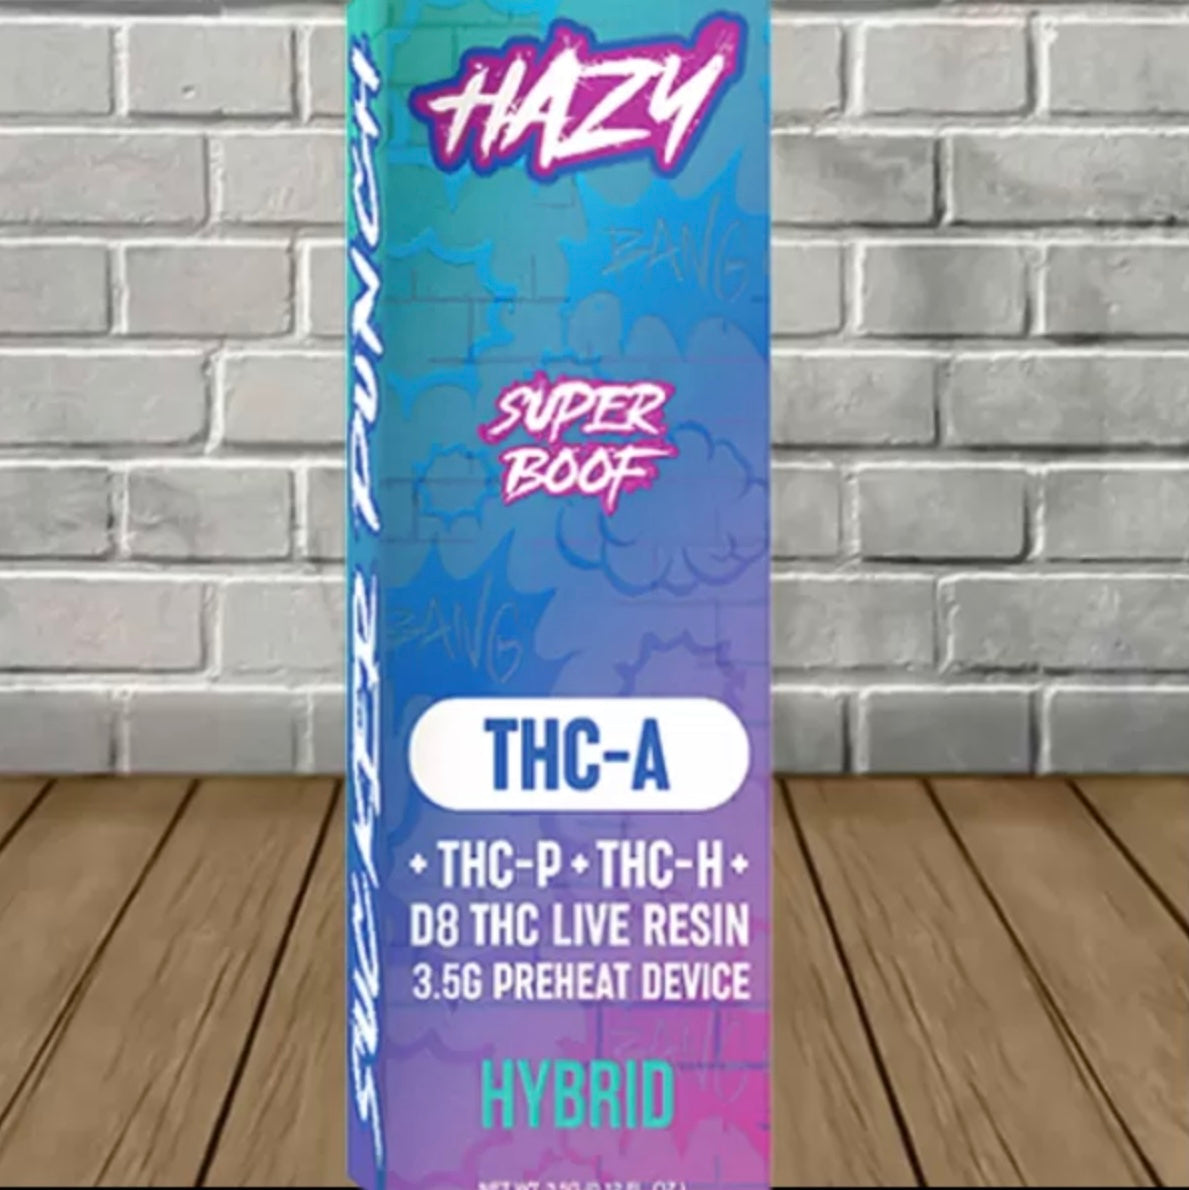 Hazy Super Boof 3.5G